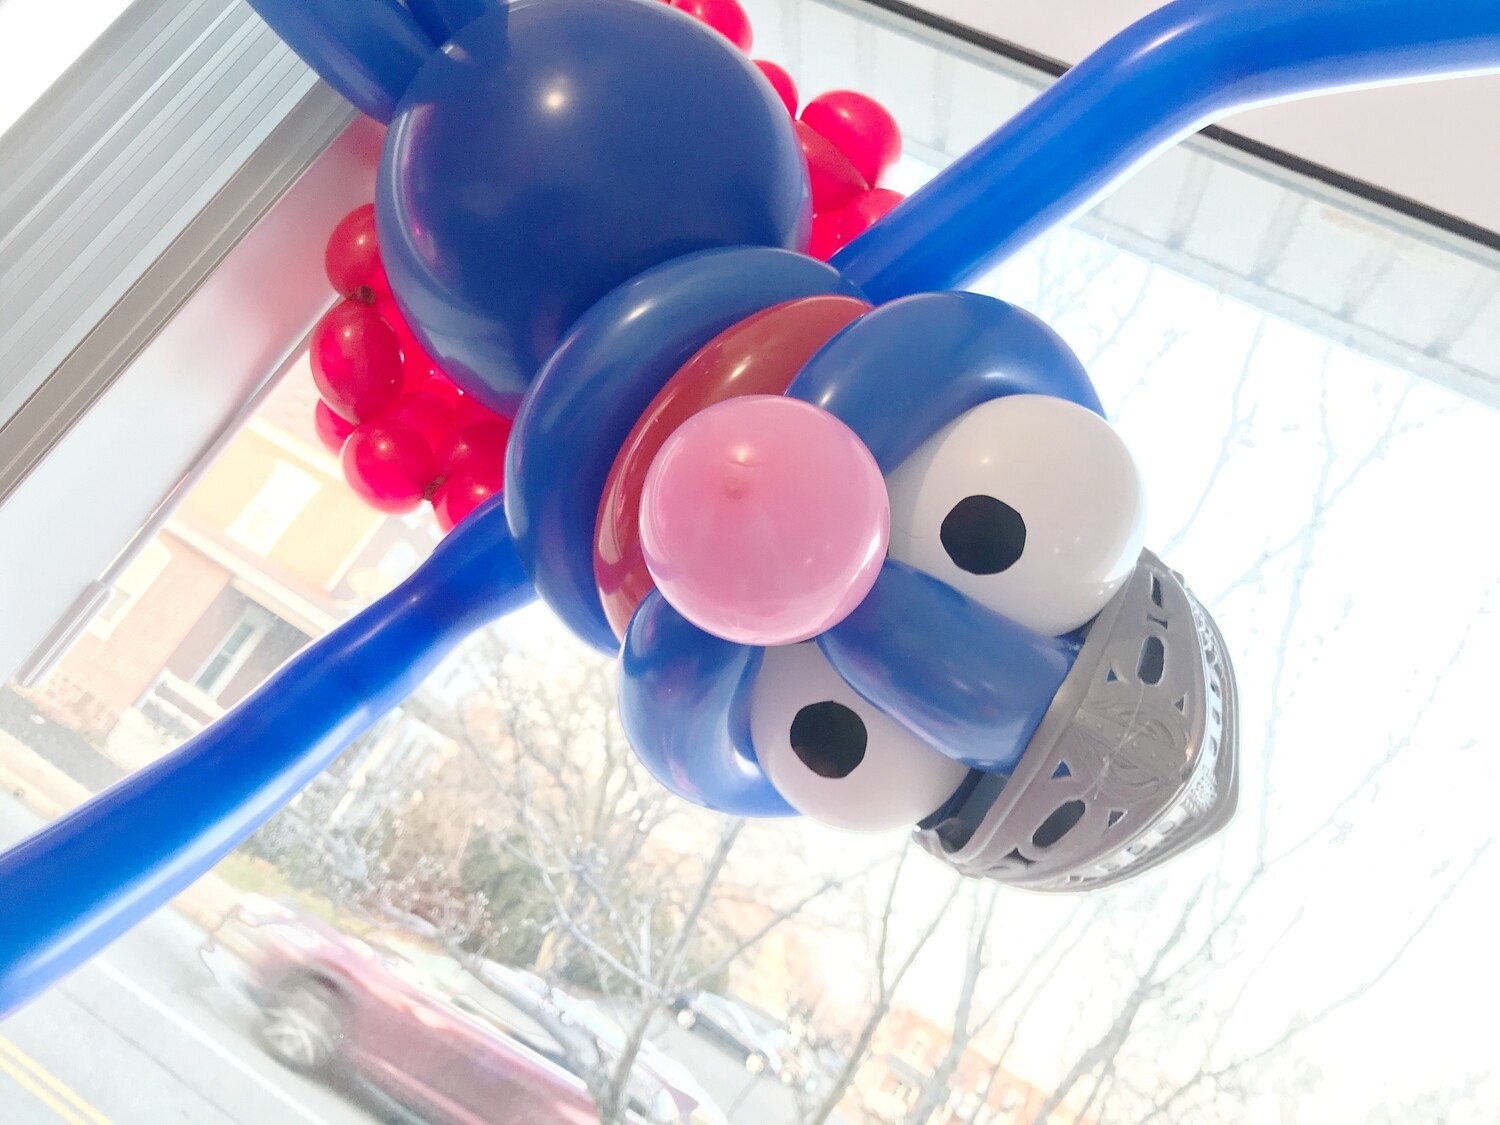 Latex Balloon animal, any mascot or character